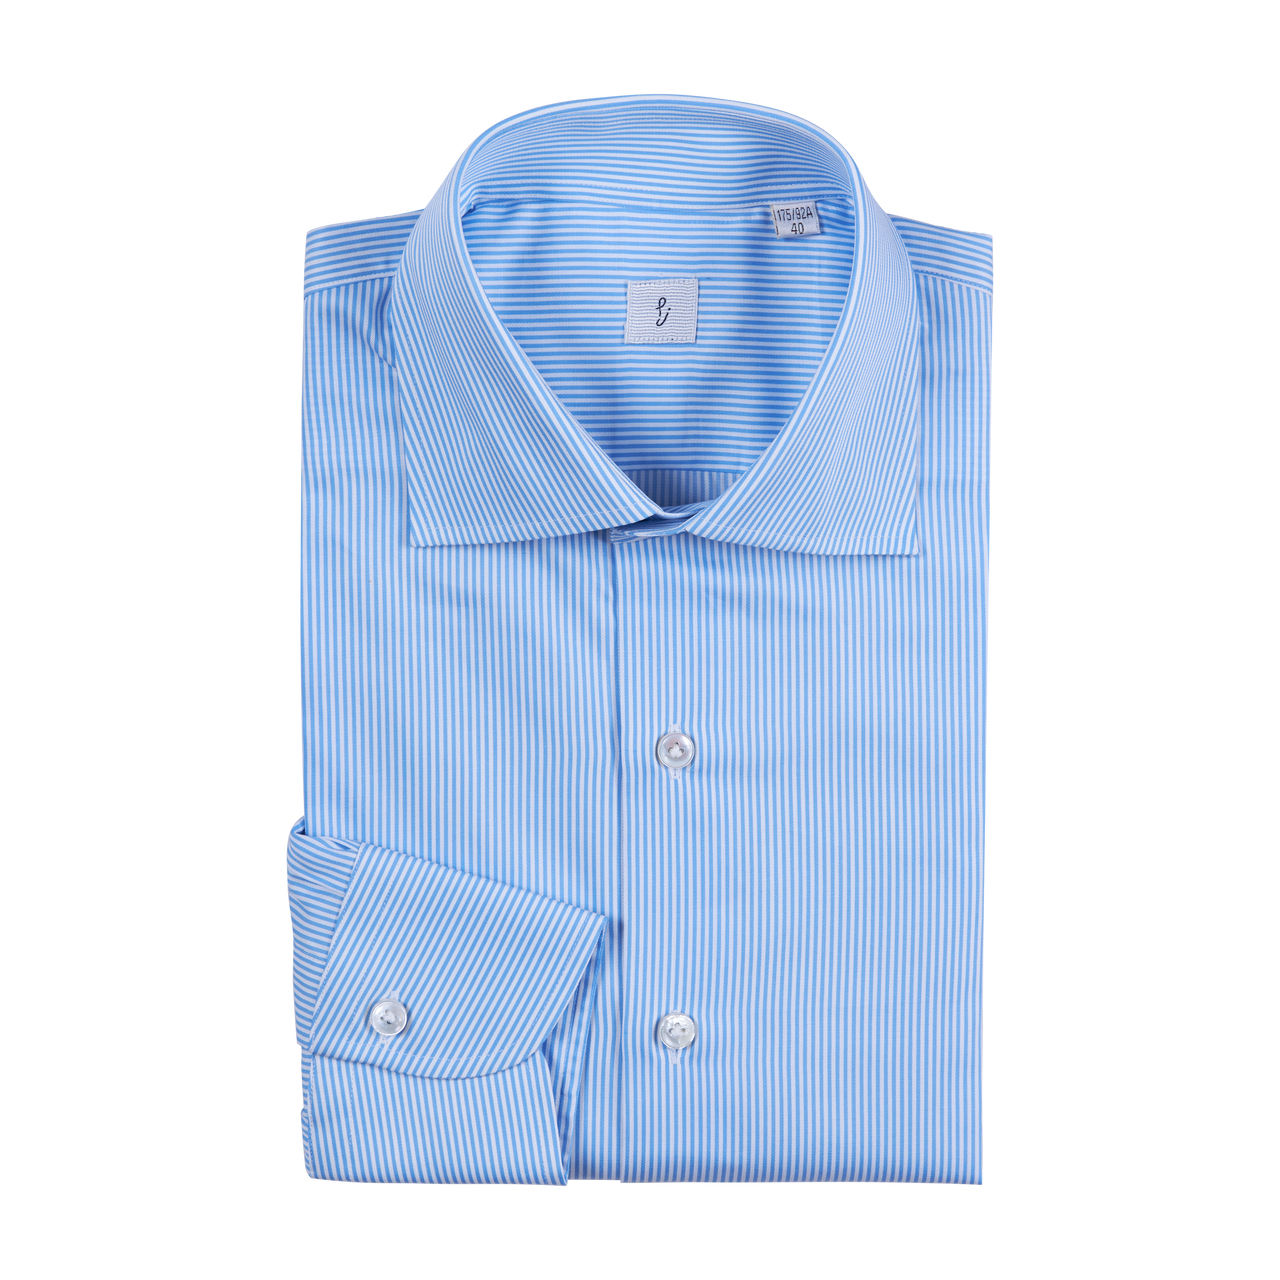 P. Johnson Shirt in Sky Blue Stripe Cotton Twill with Spread Collar